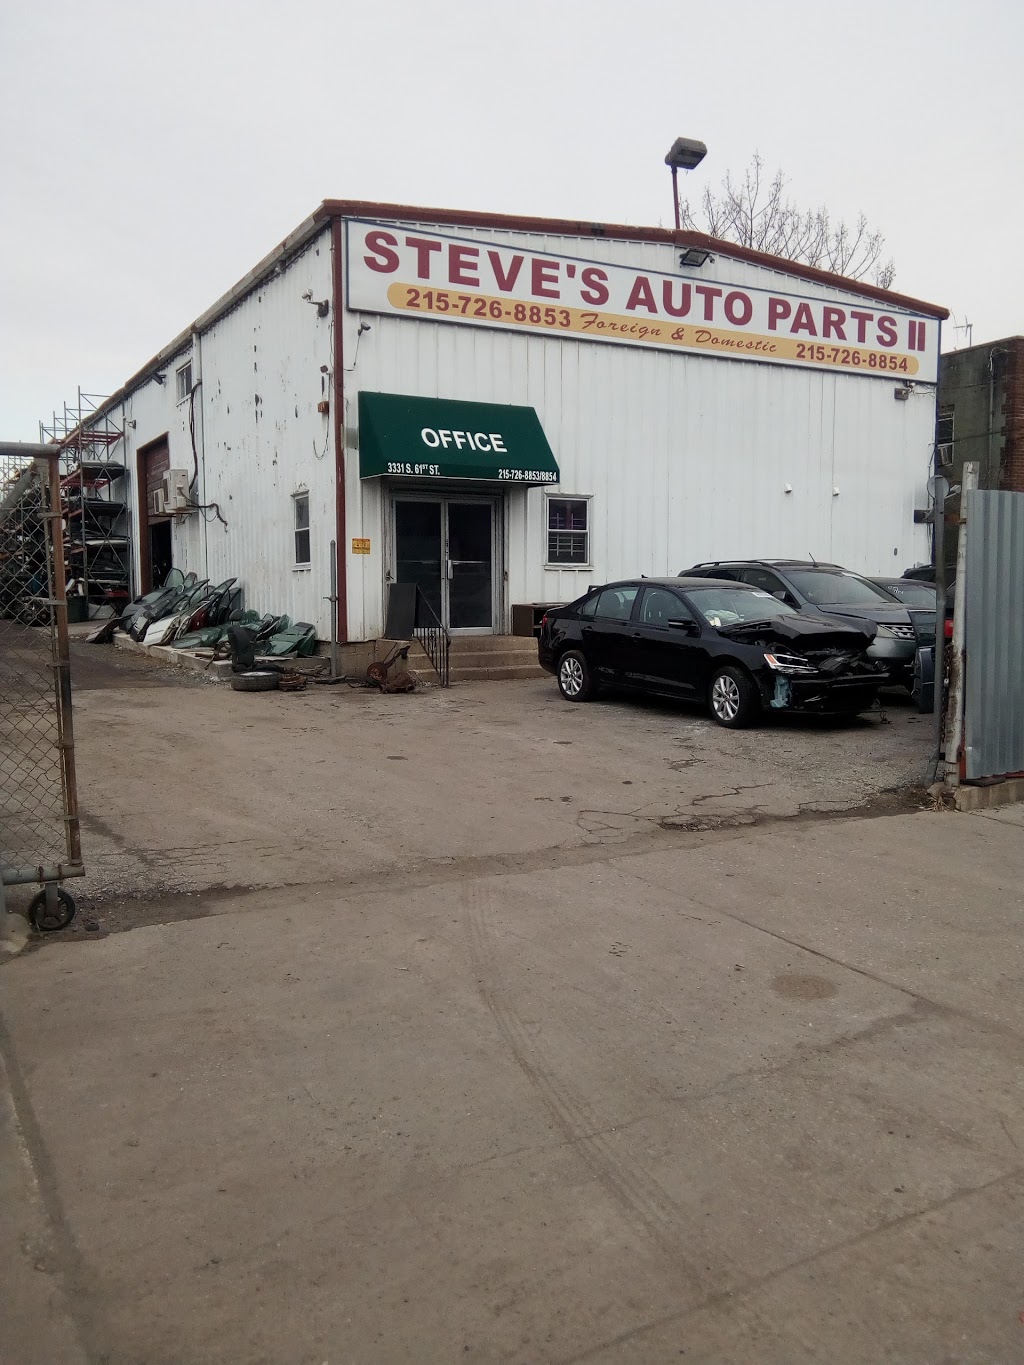 Steves Auto Parts II | 3331 S 61st St, Philadelphia, PA 19153 | Phone: (215) 726-8853